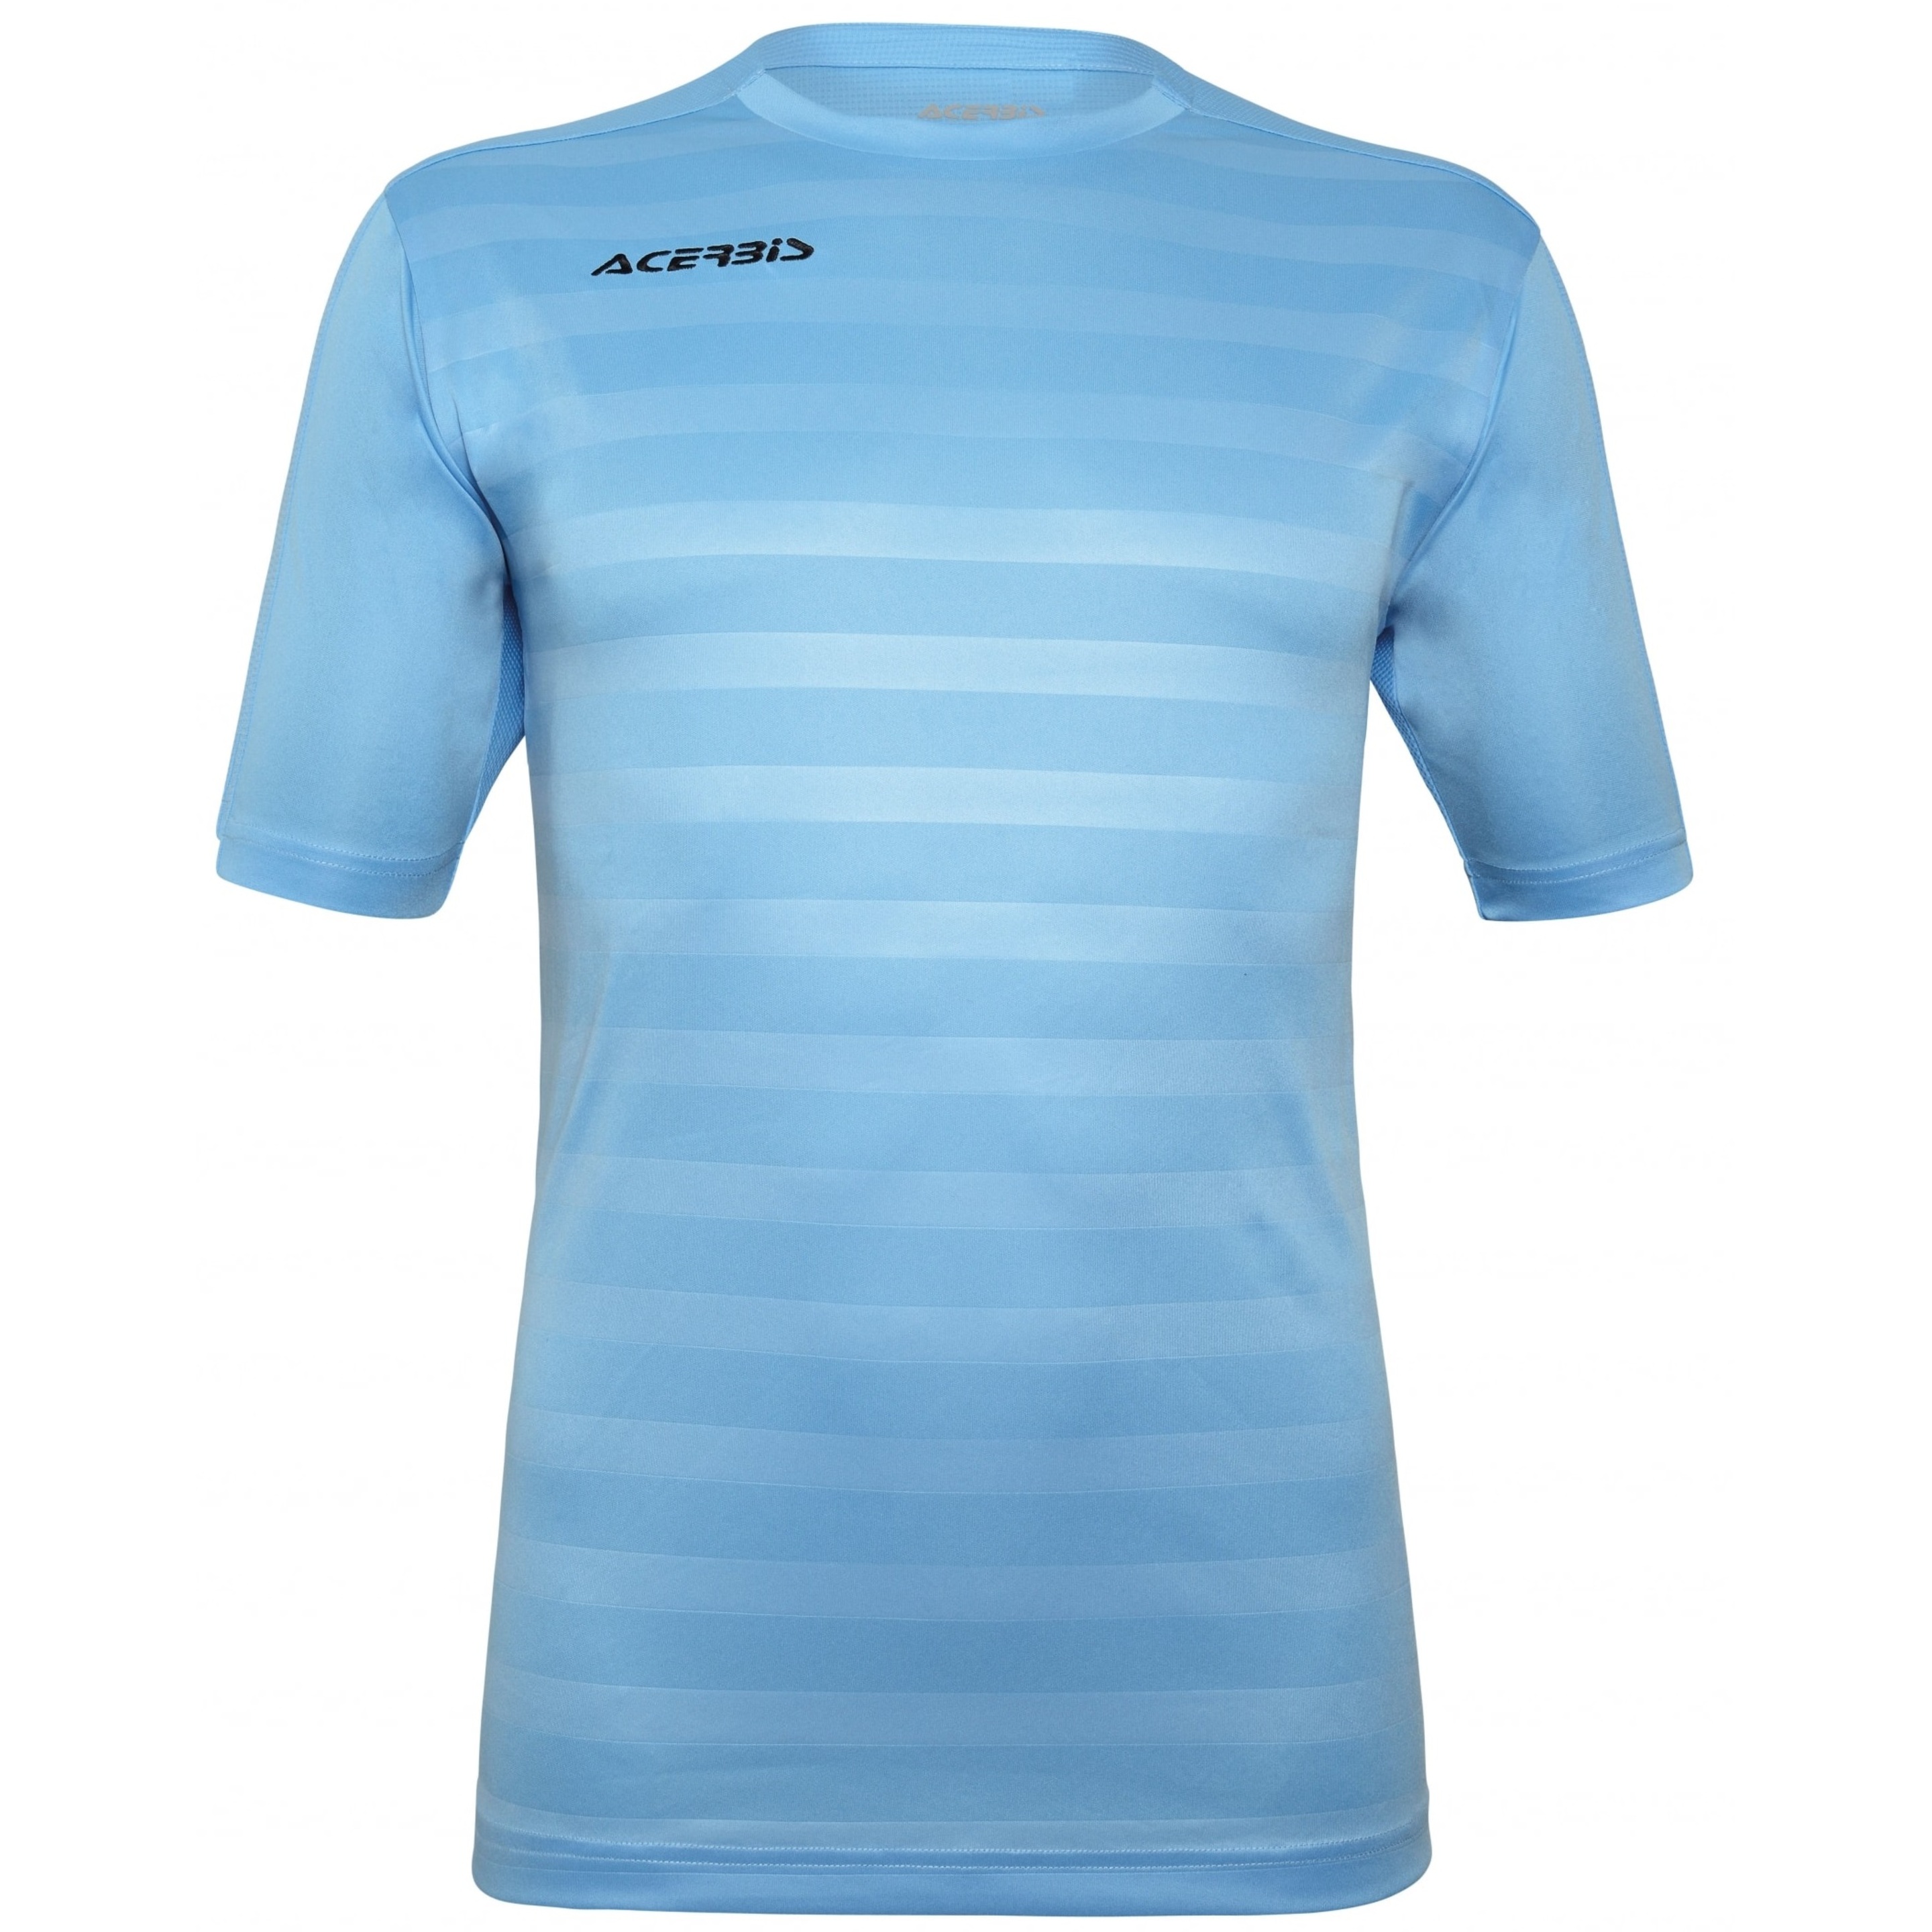 Camiseta Manga Corta Acerbis Atlantis2 - Azul Claro - Camiseta Deportiva  MKP